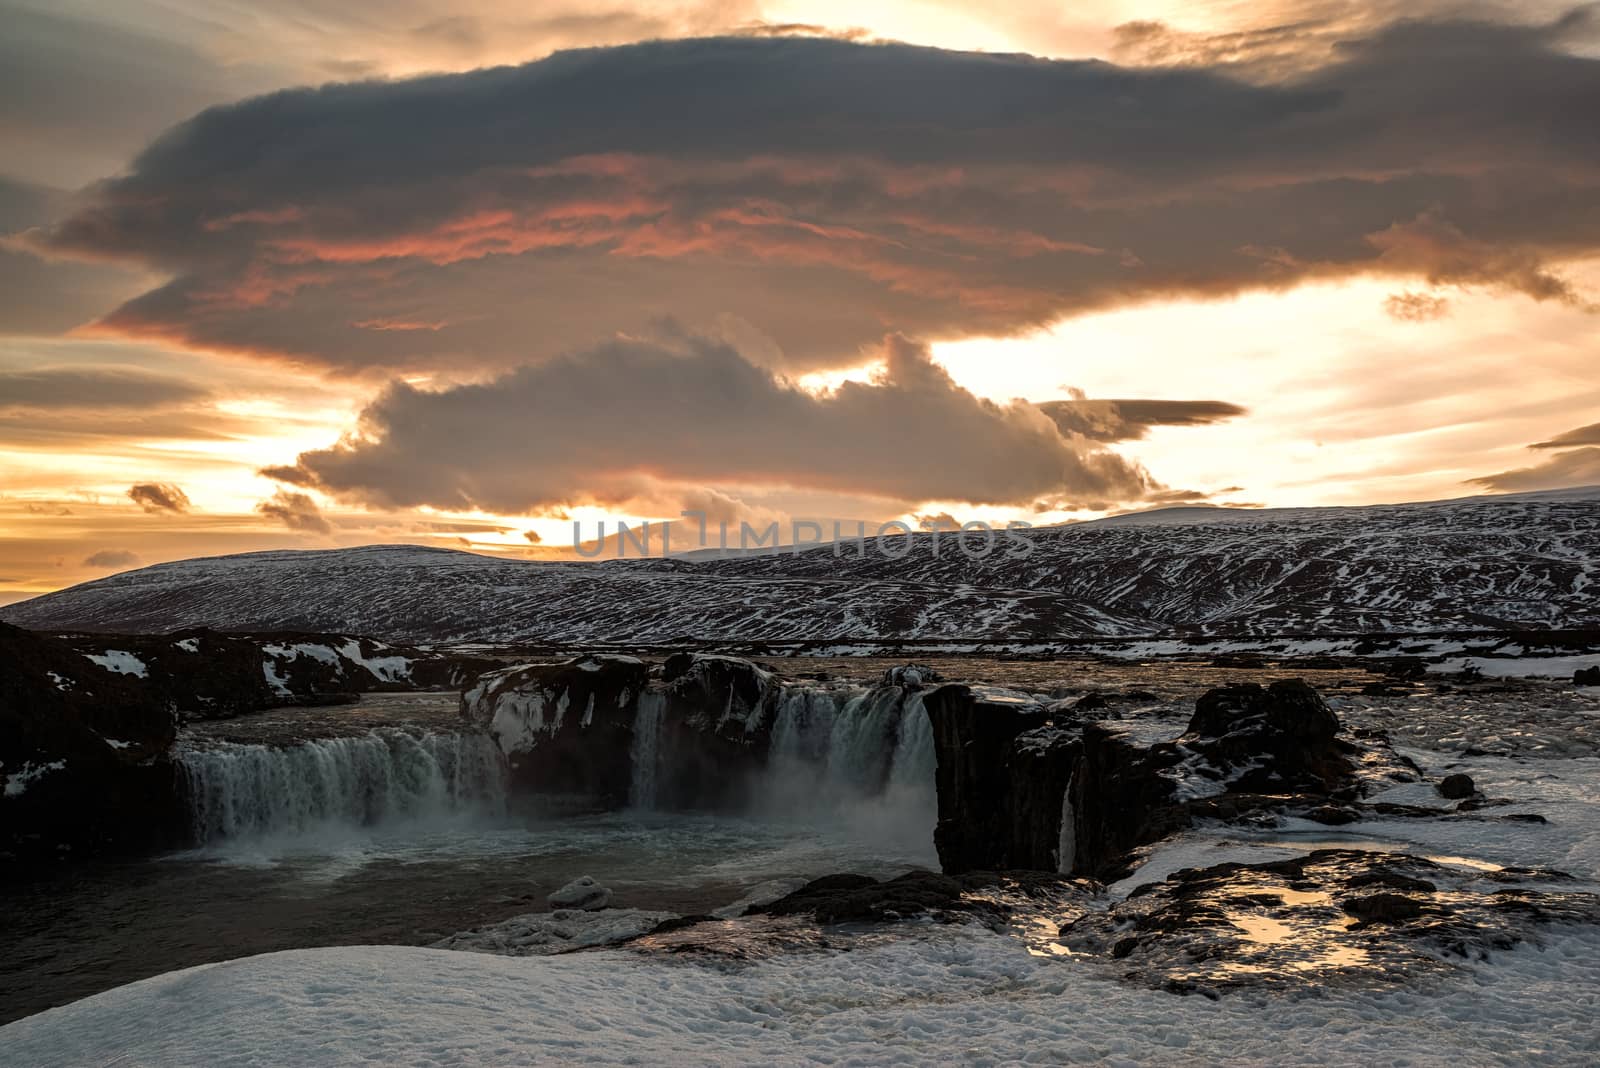 Godafoss waterfall at sunset, Iceland by LuigiMorbidelli